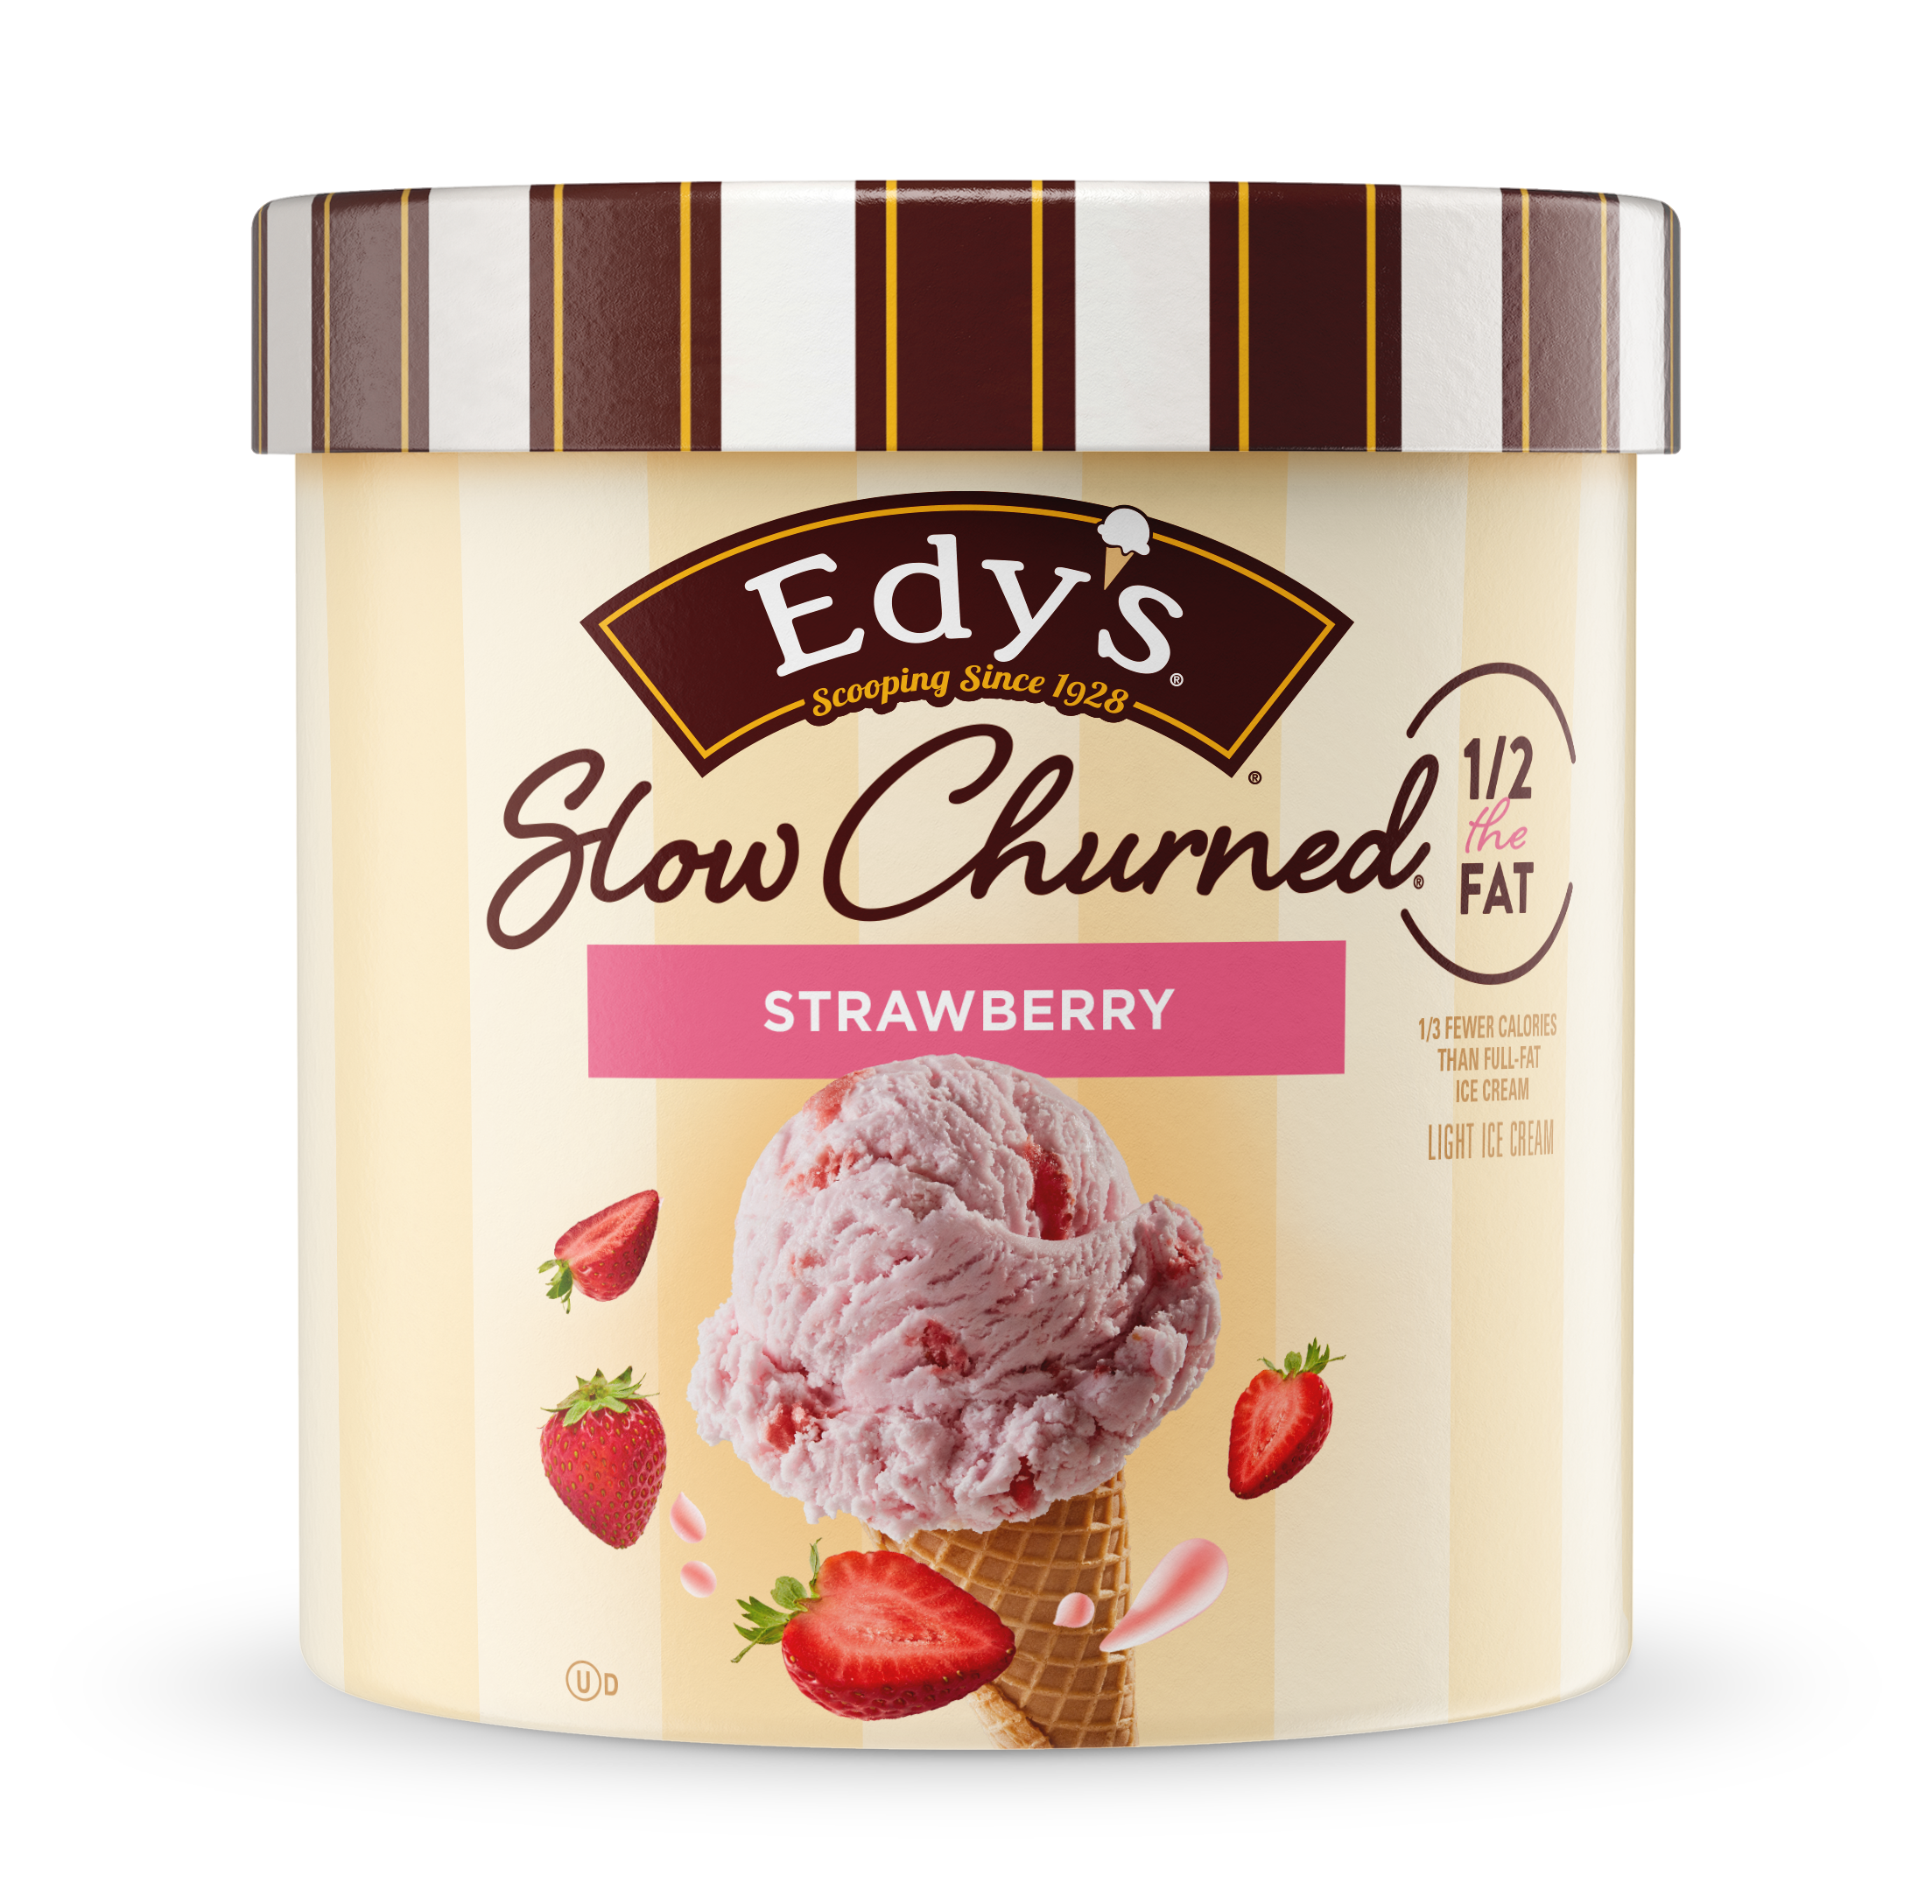 Carton of Edy's slow-churned Strawberry ice cream